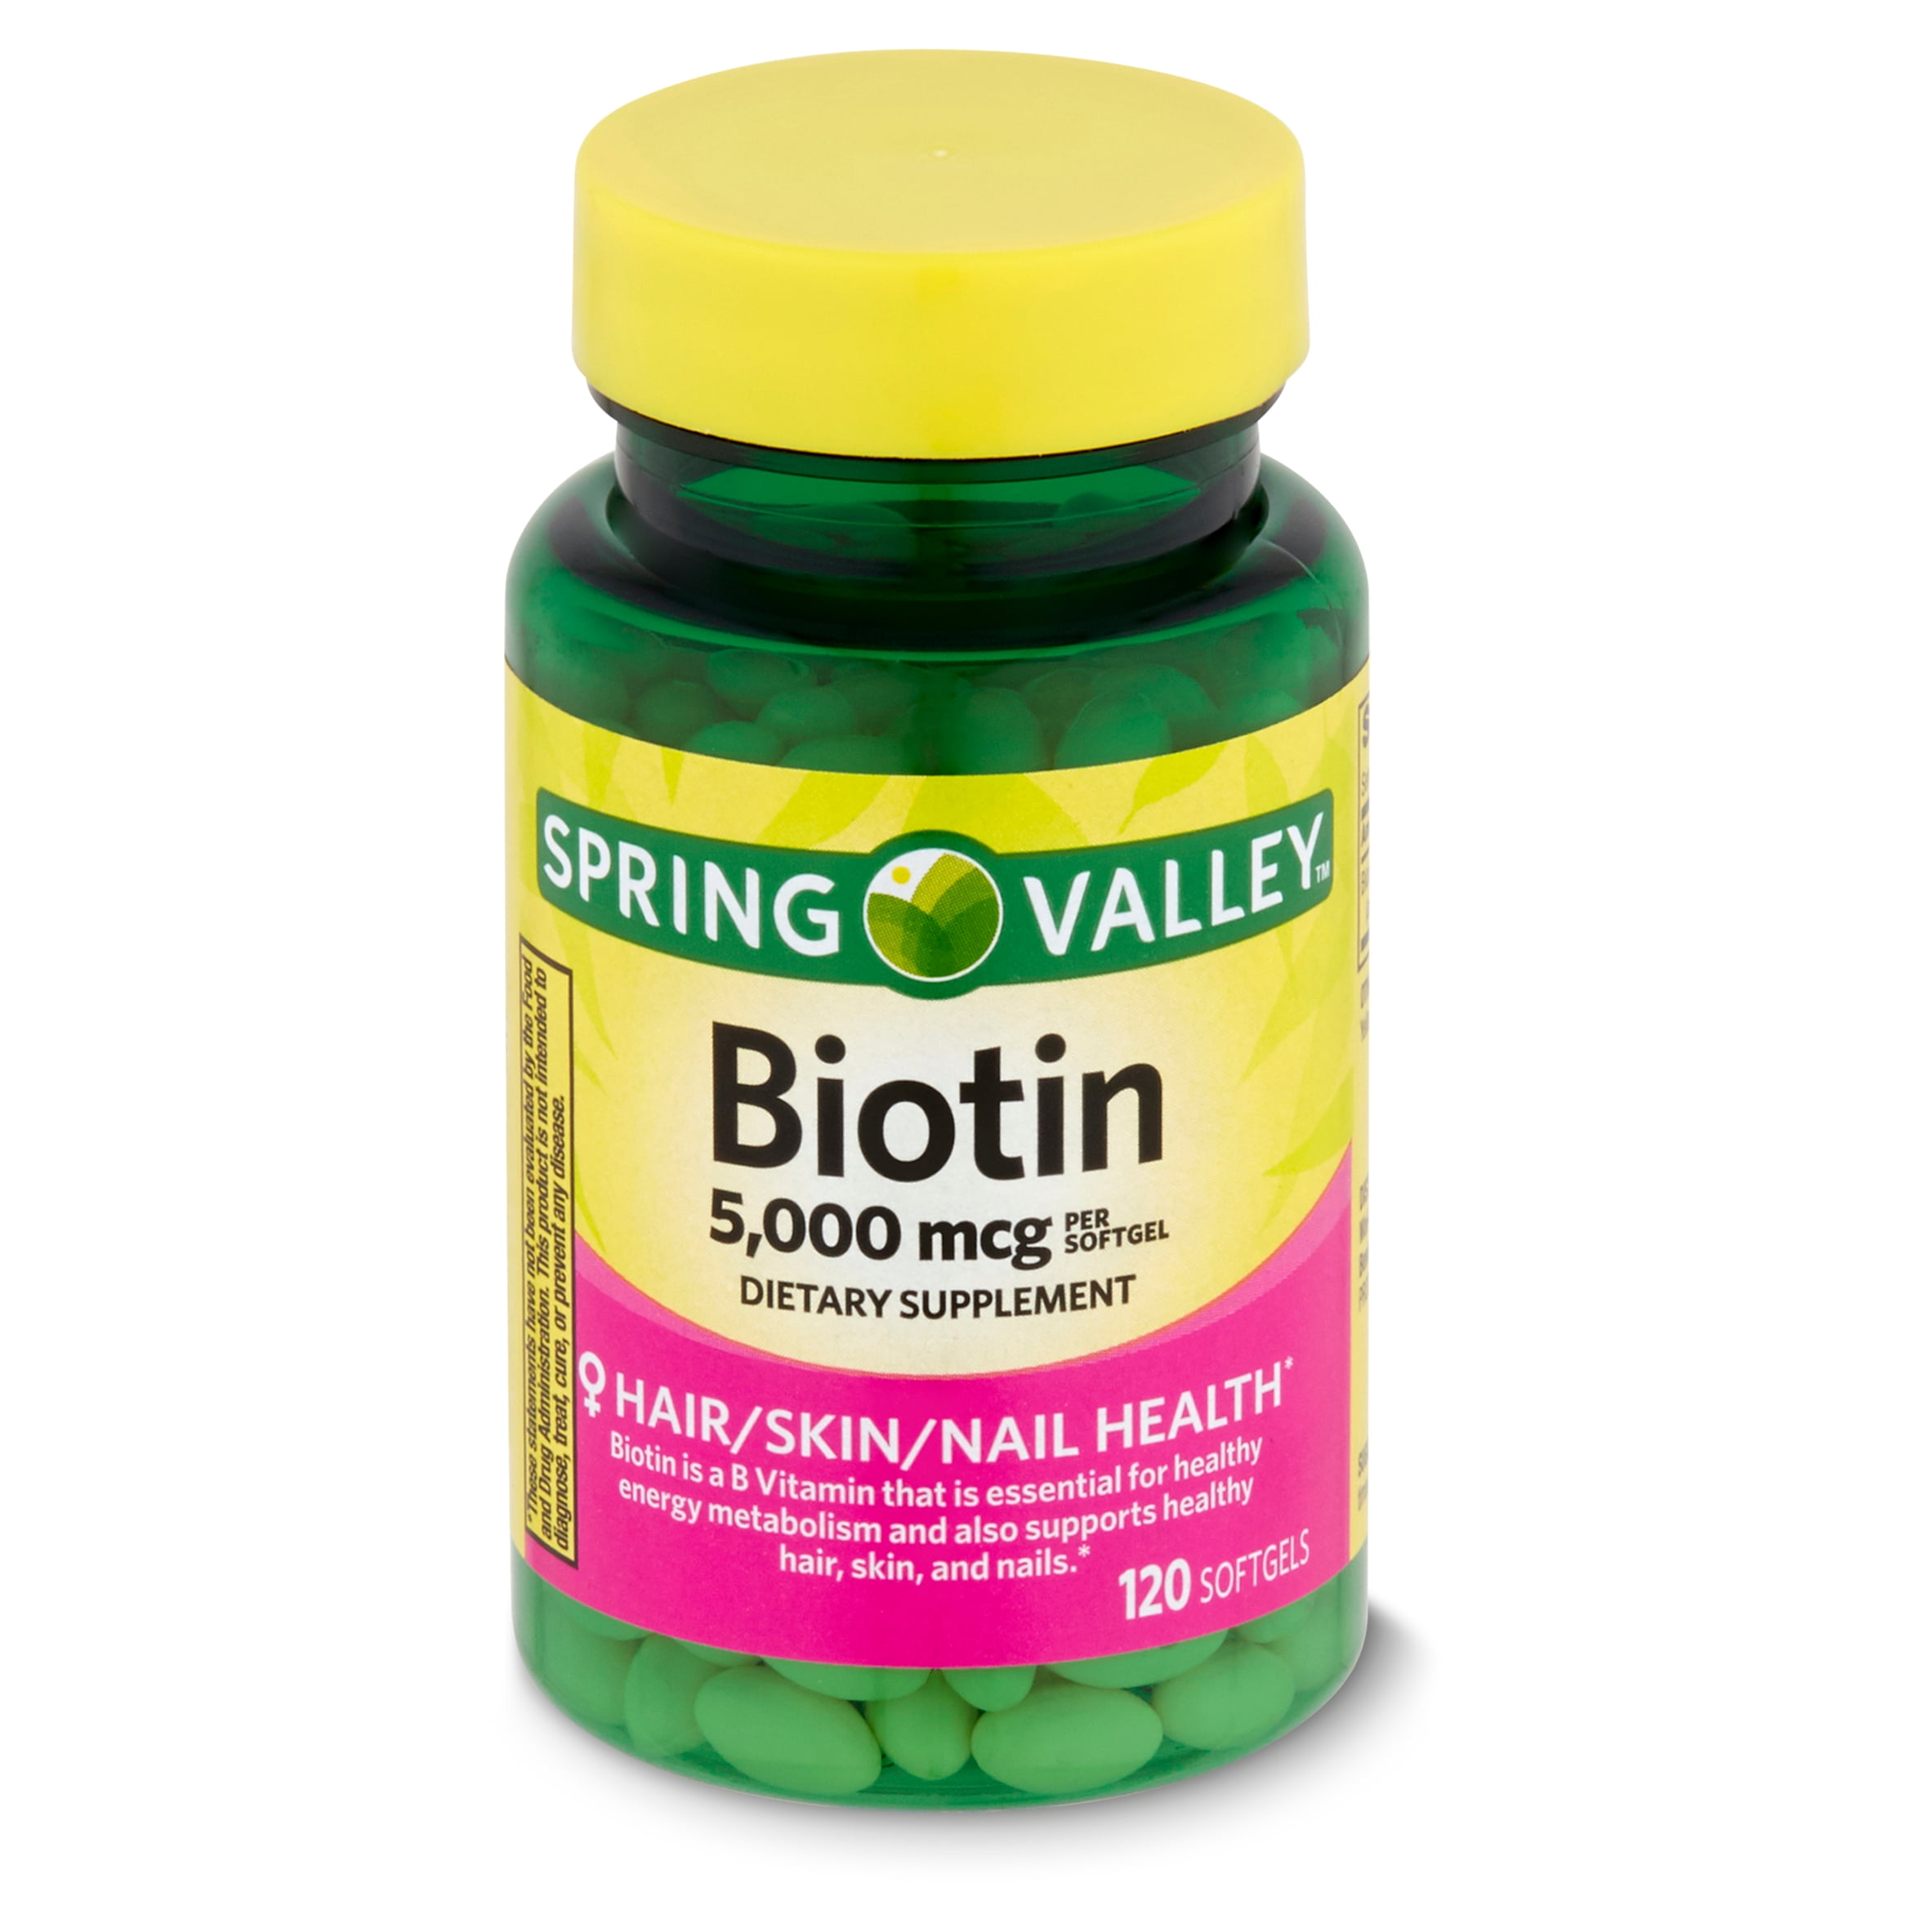 Spring Valley Biotin Dietary Supplement, 5,000 mcg, 120 count 